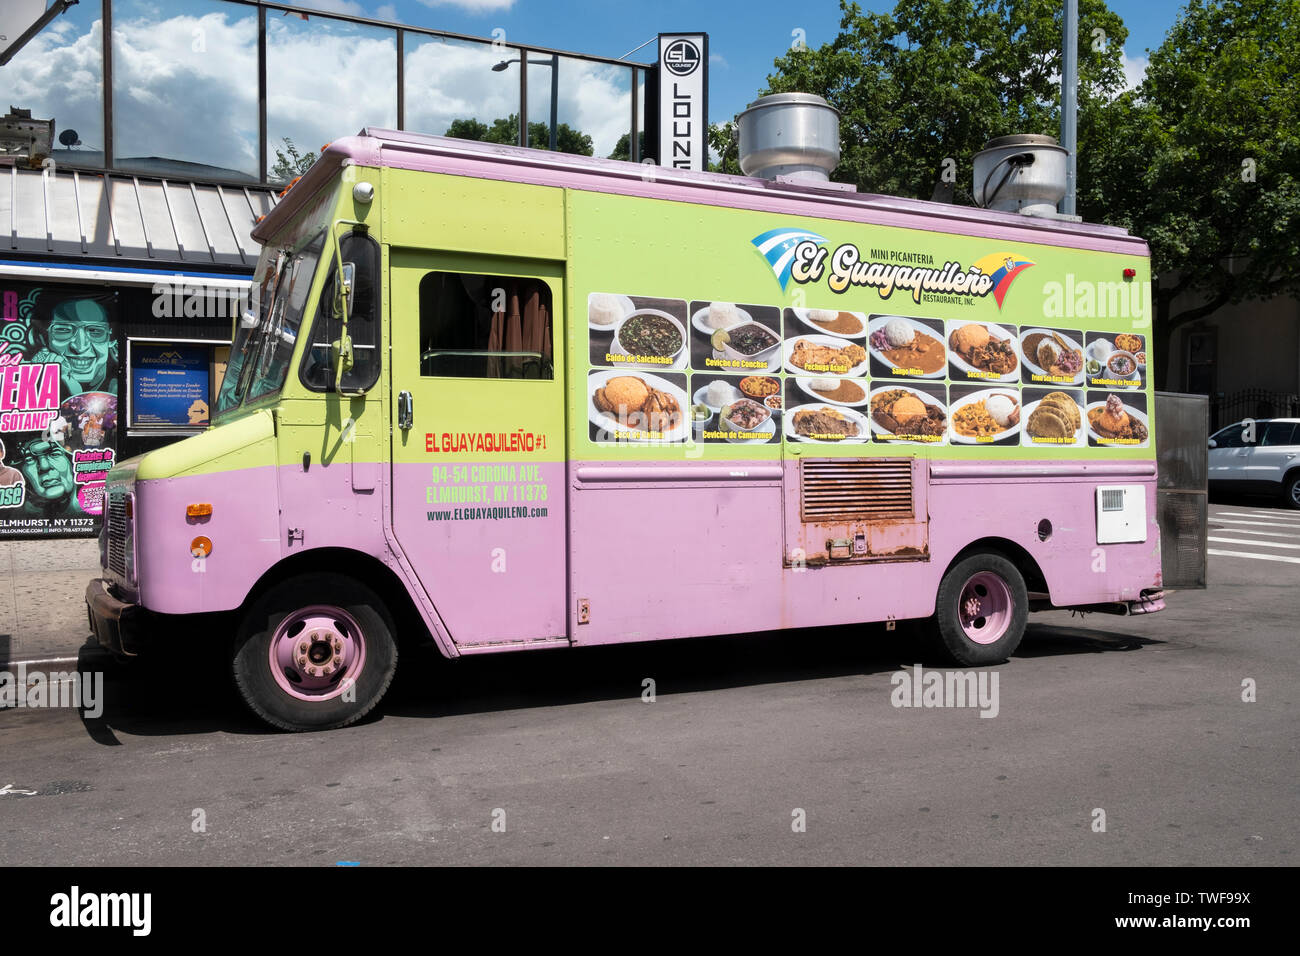 The EL GUAYAQUILLENO Ecuadorian food truck parked on Warren Street in Elmhurst, Queens near the elevated subway. Stock Photo